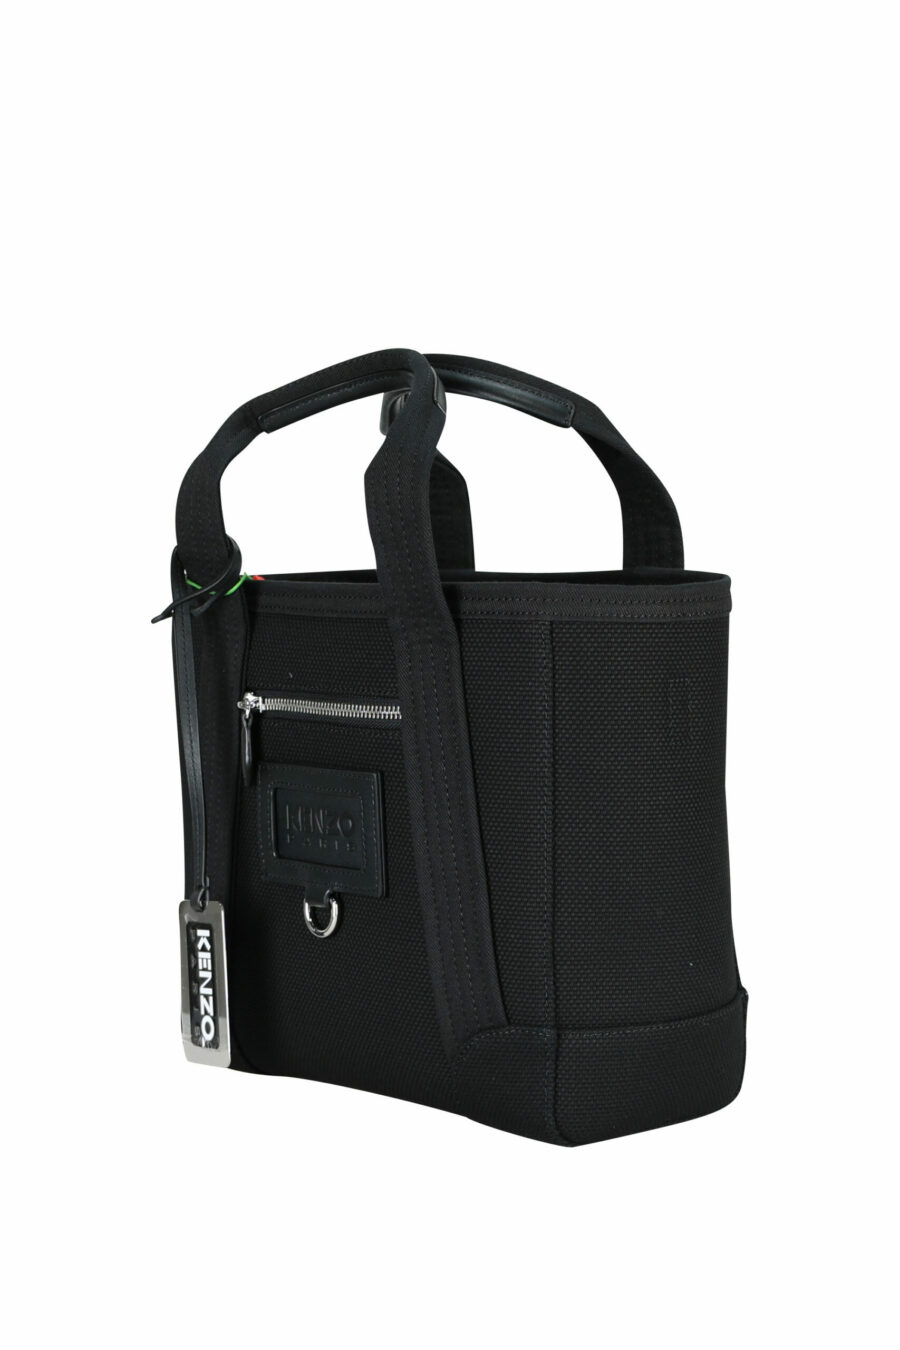 Tote bag bandolera negro con logo "kenzo tag" - 3612230579071 1 scaled